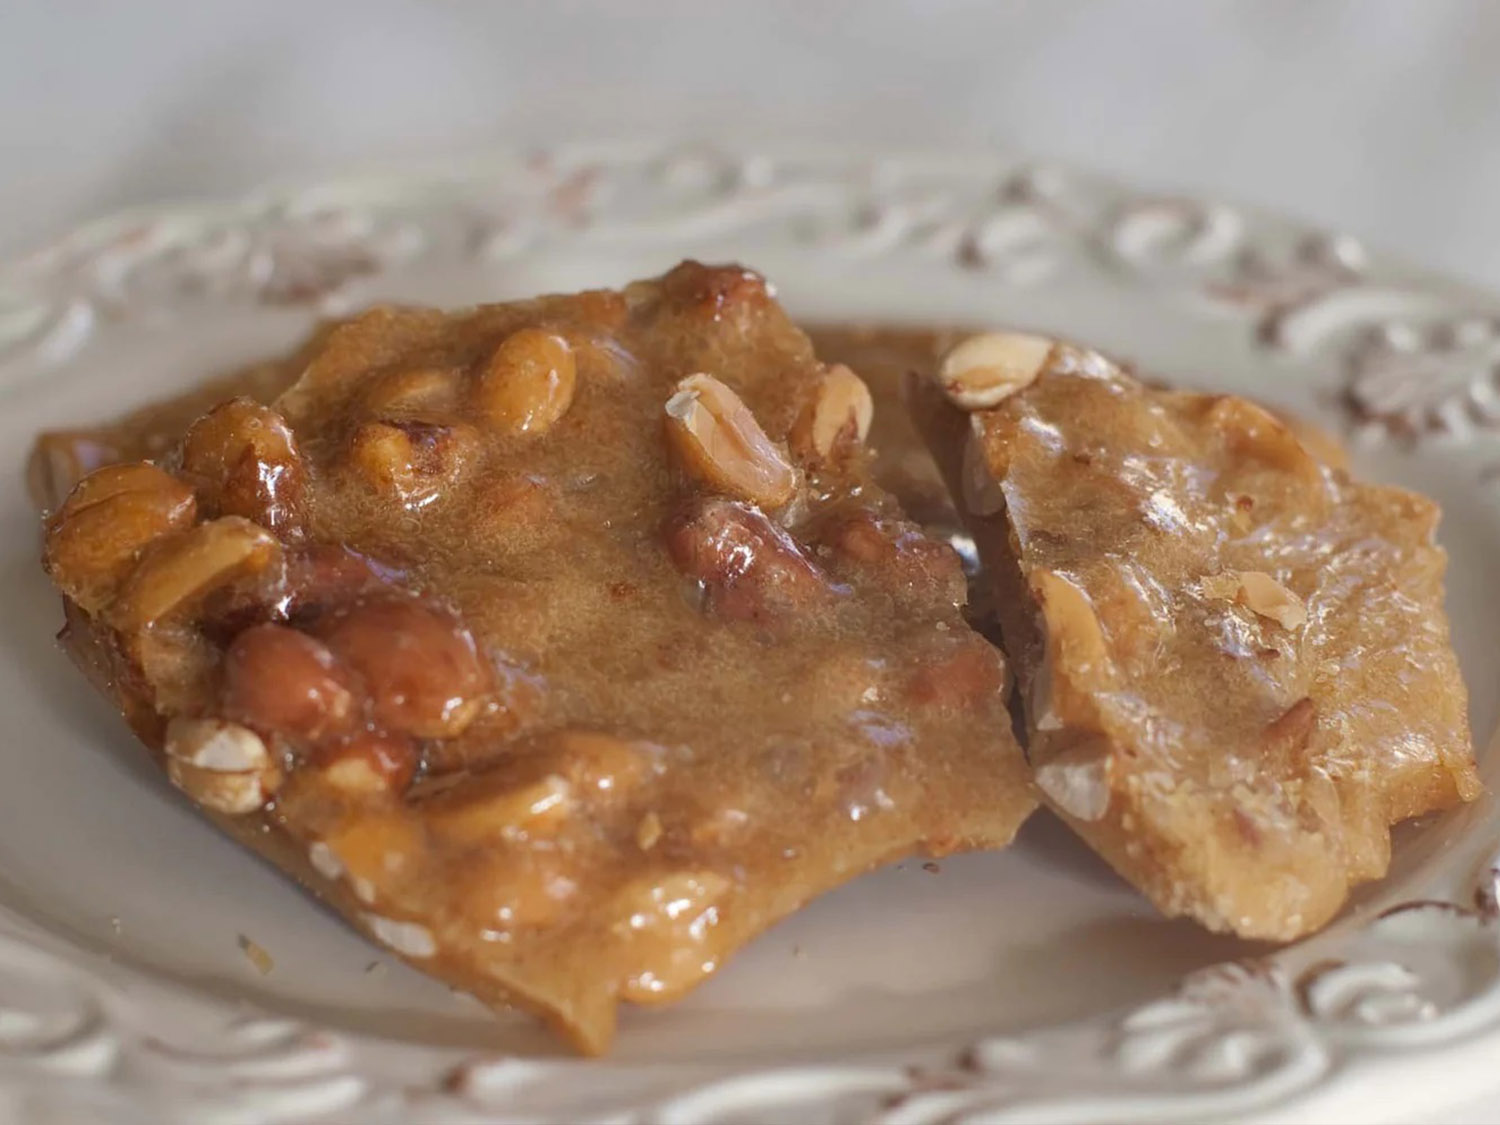 Papa C Pies - Peanut Brittle: The Dessert That Almost Wasn’t